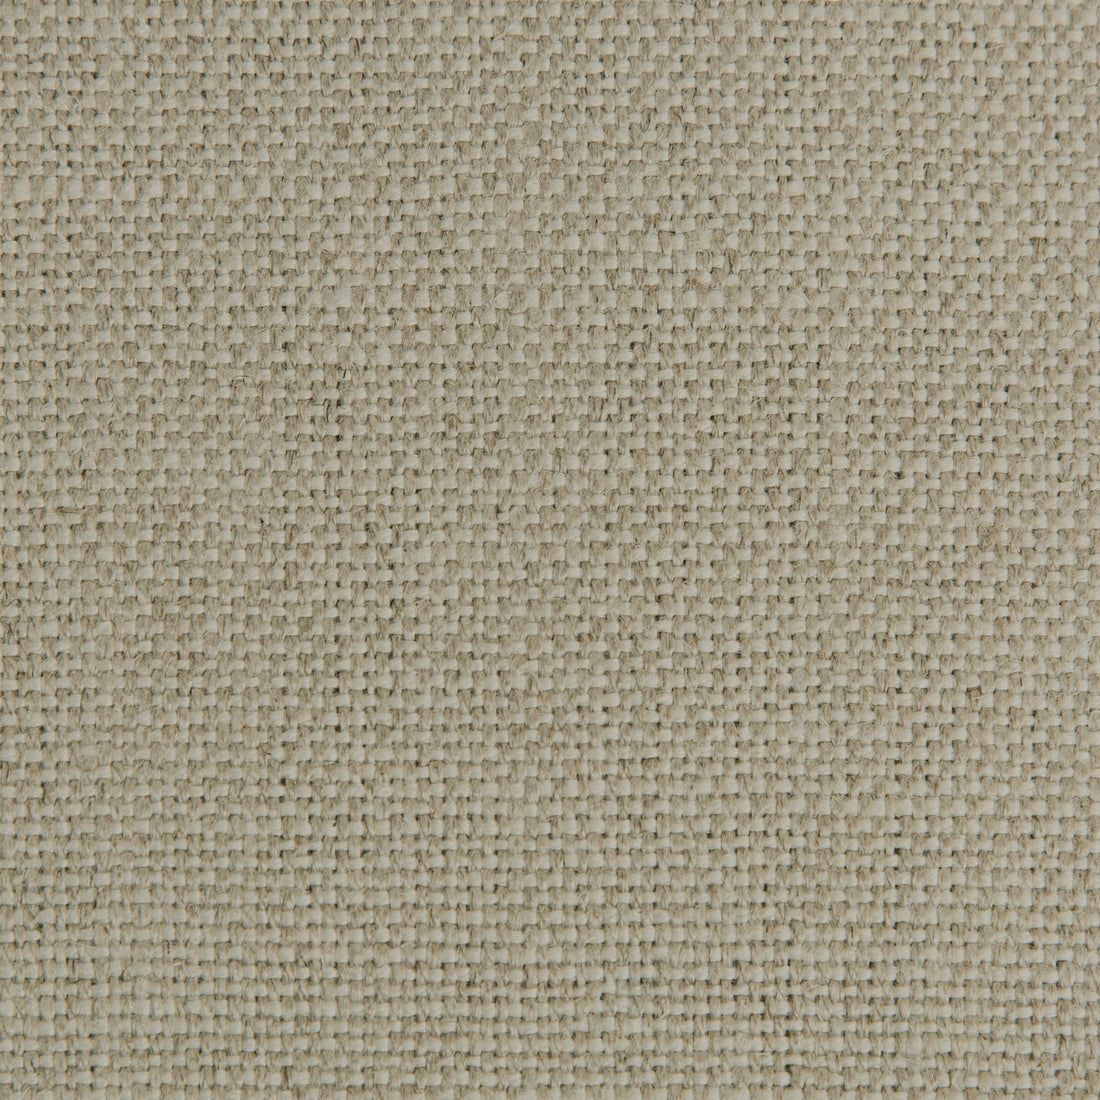 Deia Linen fabric in sand color - pattern 35071.161.0 - by Kravet Design in the Alexa Hampton Mallorca collection